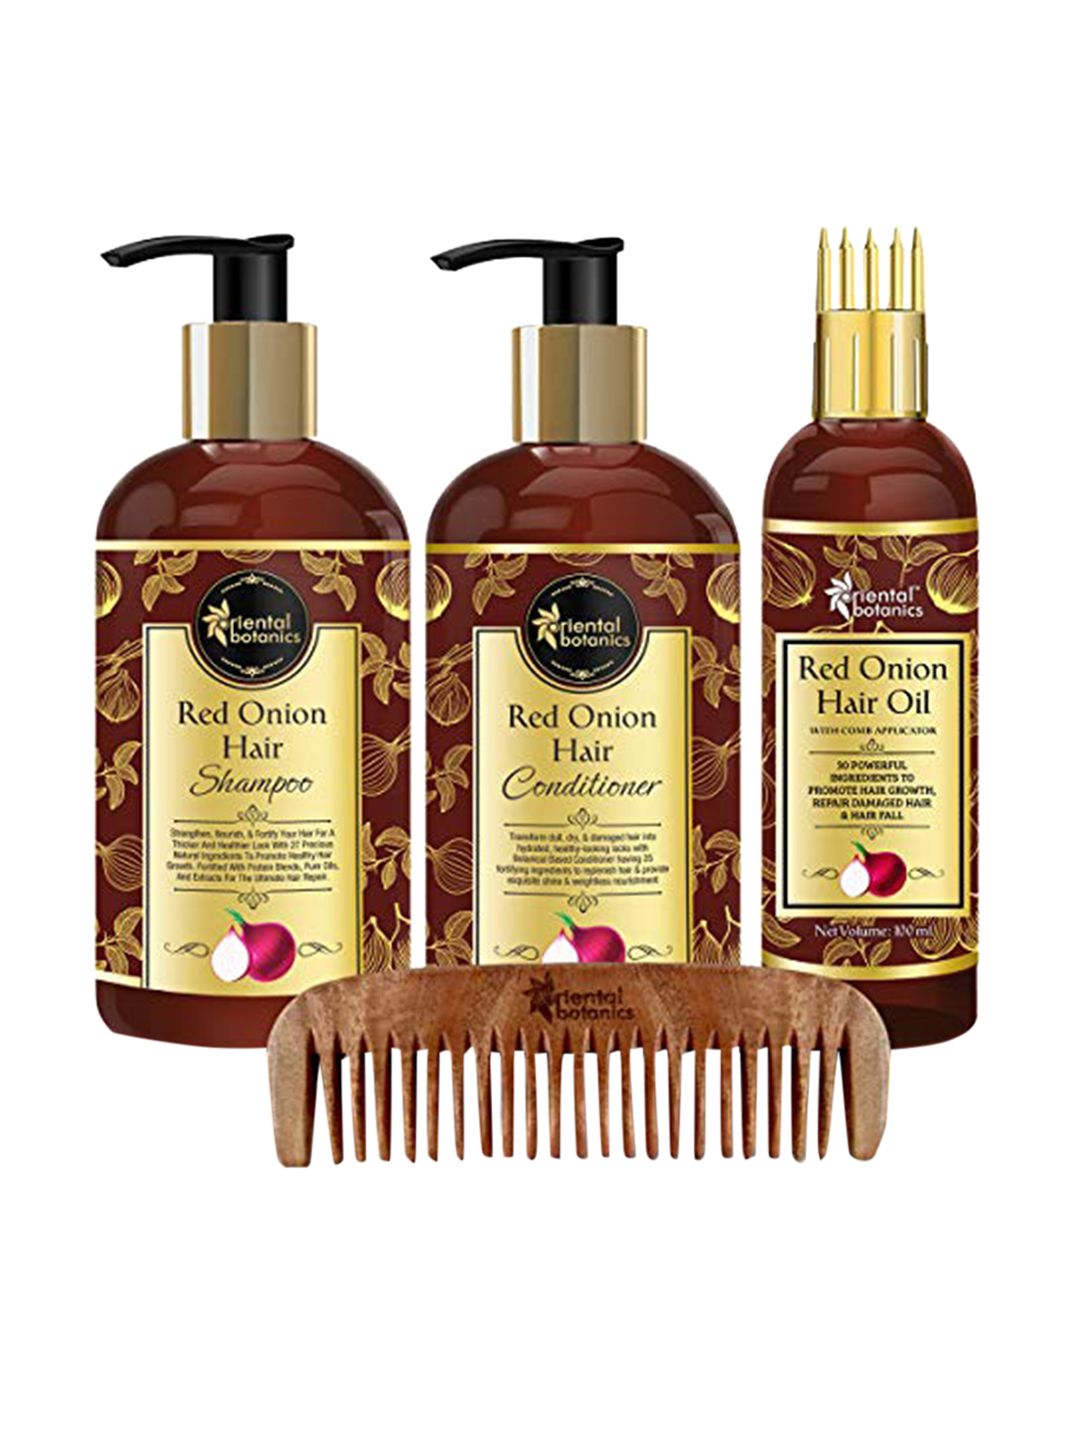 Oriental Botanics Unisex Red Onion Hair Shampoo, Conditioner, Hair Oil, Neem Comb 700 ml Price in India